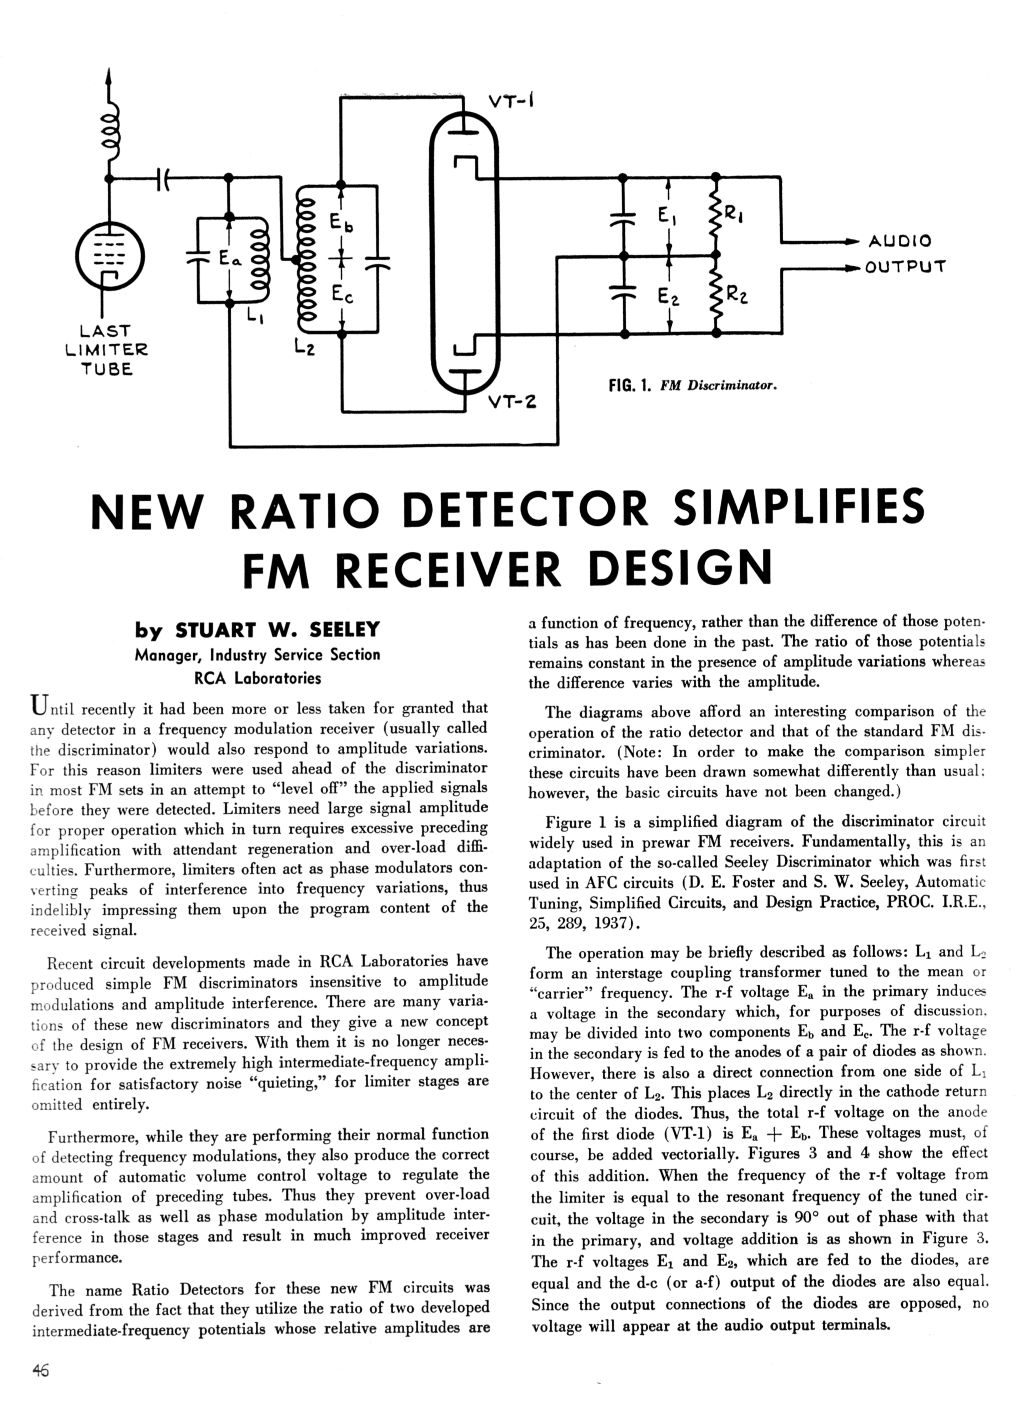 Ratio Detector Simplifies FM Receiver Design, page 1